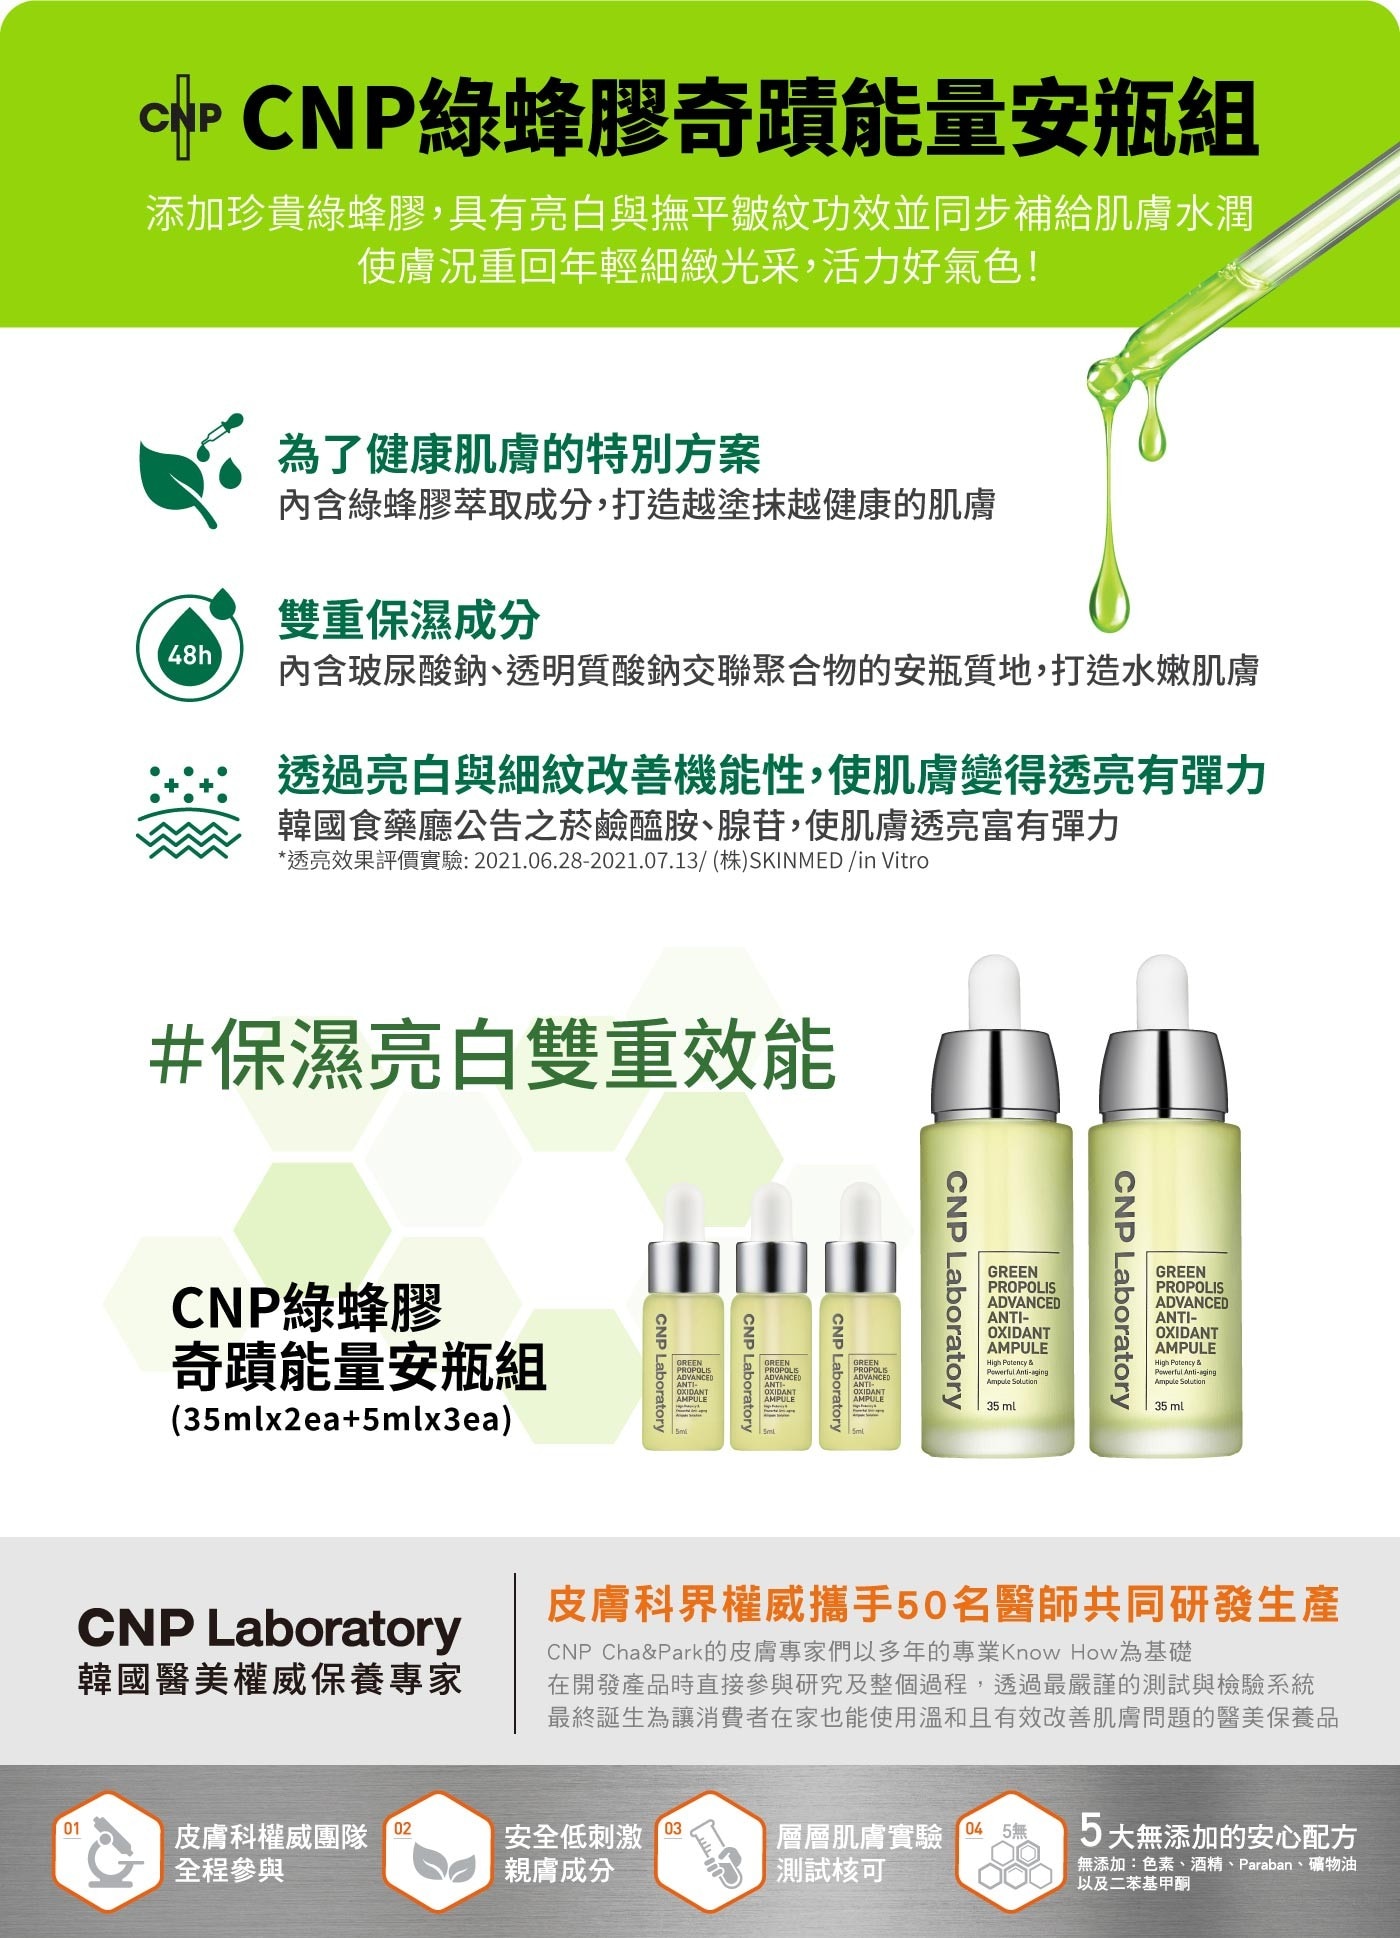 CNP  Laboratory綠蜂膠奇蹟能量安瓶組添加珍貴蜂膠萃取，能使肌膚彈潤水亮、撫平細紋。能改善躁動肌膚、賦予疲憊失去力量的肌膚所需光澤與潤澤感。